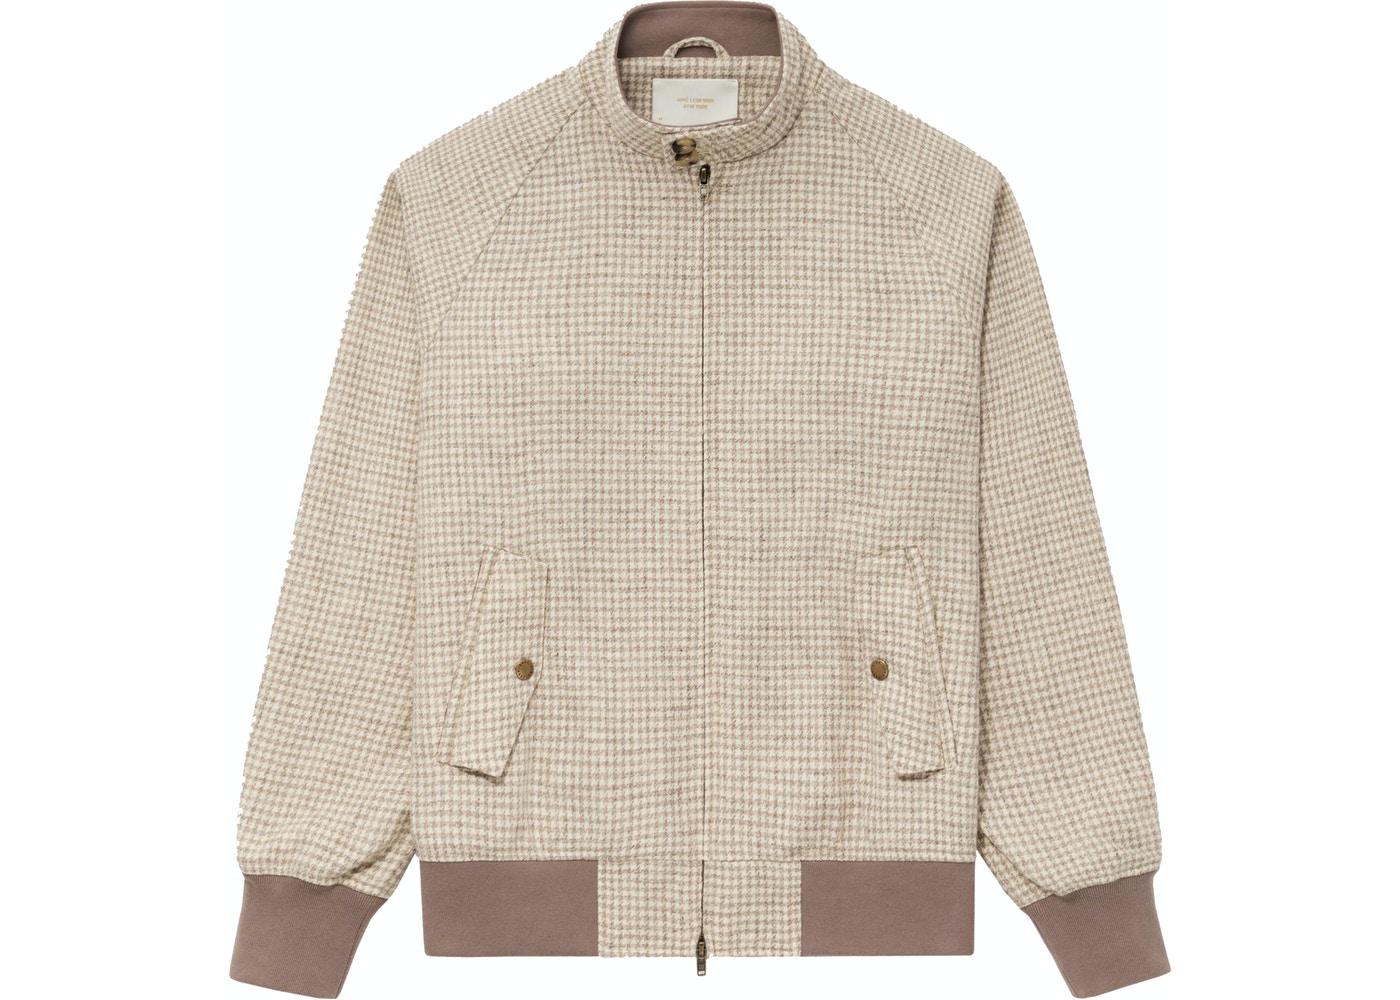 Wool Harrington Jacket Cream Houndstooth by AIME LEON DORE